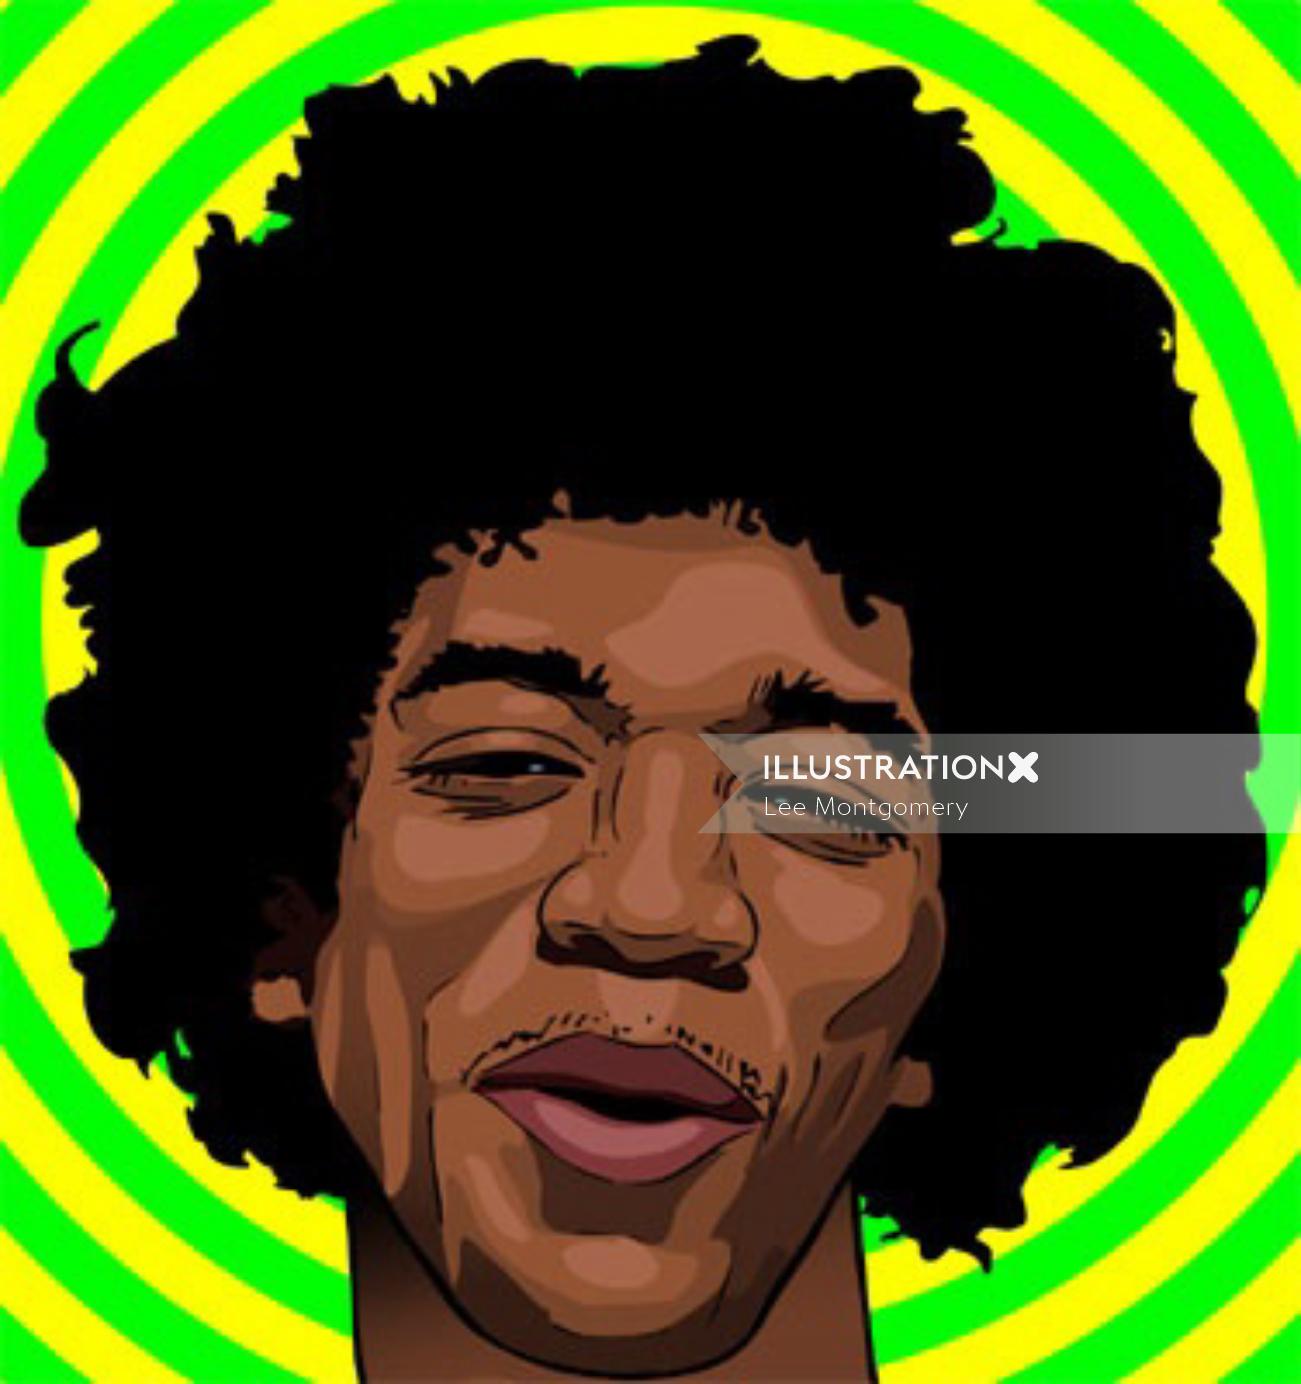 Graphic Jimmy Hendrix
